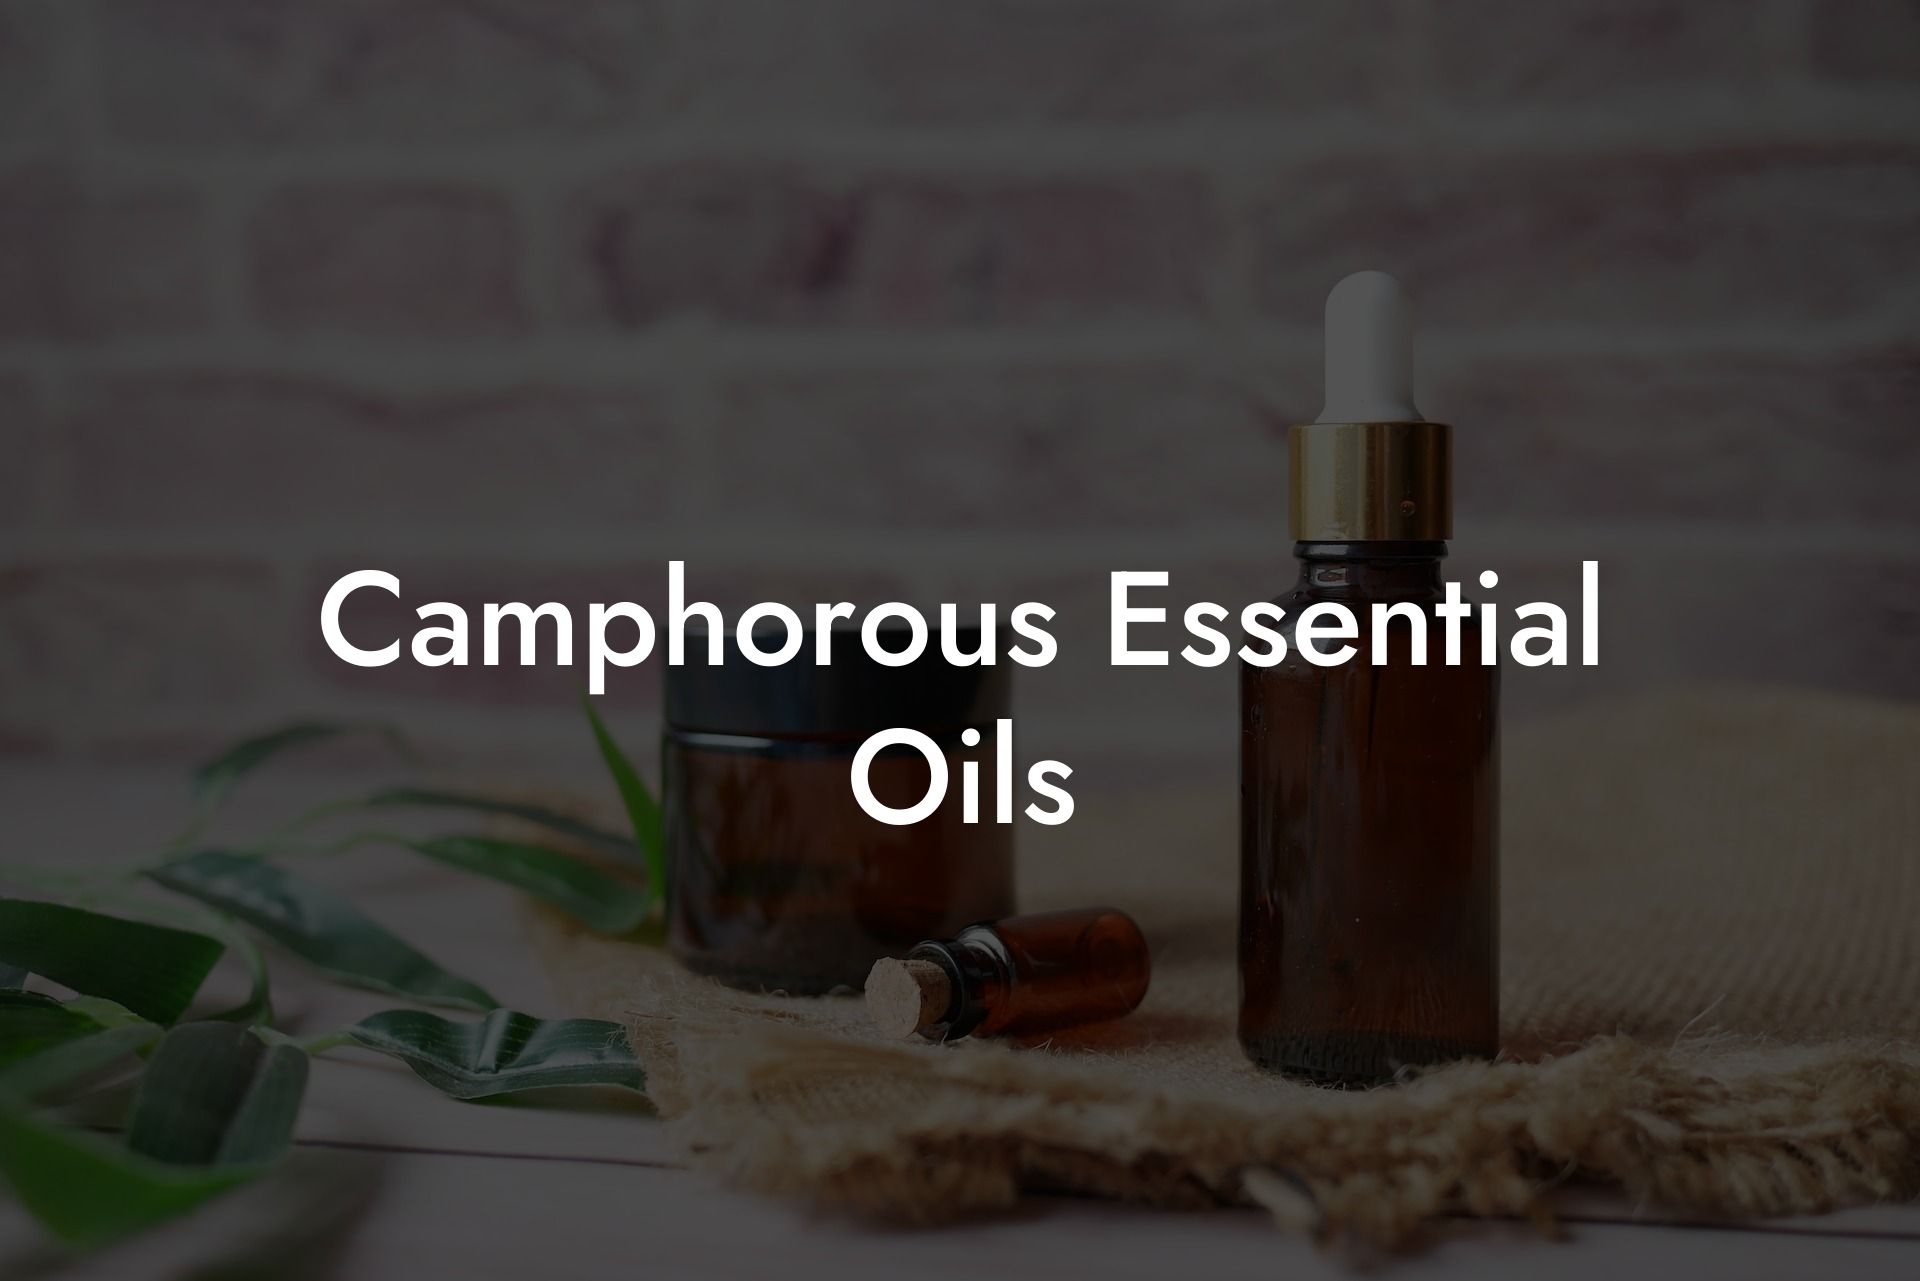 Camphorous Essential Oils